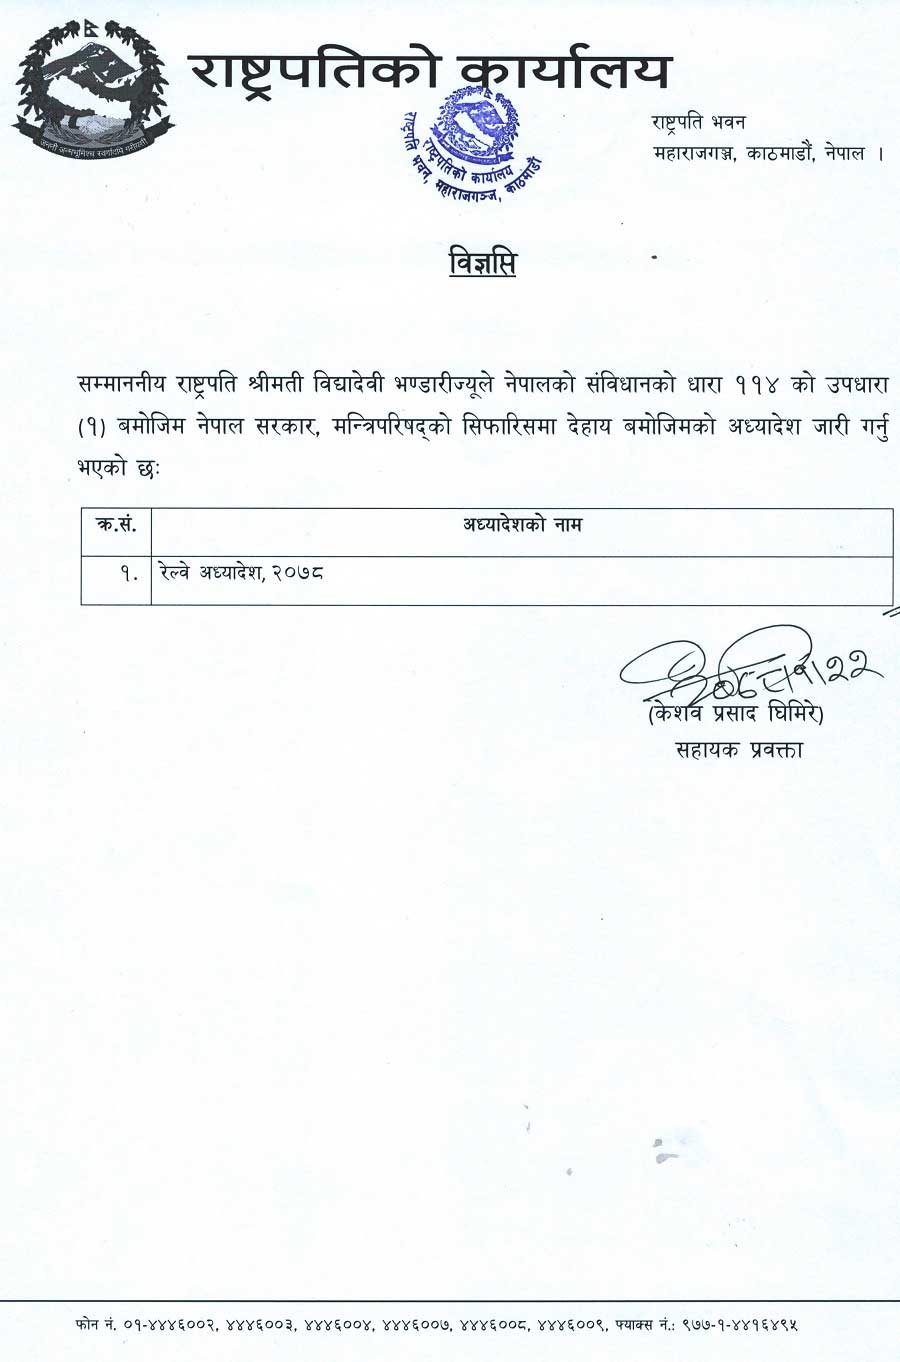 President Bidya Devi Bhandari Issued Railway Ordinance 2078